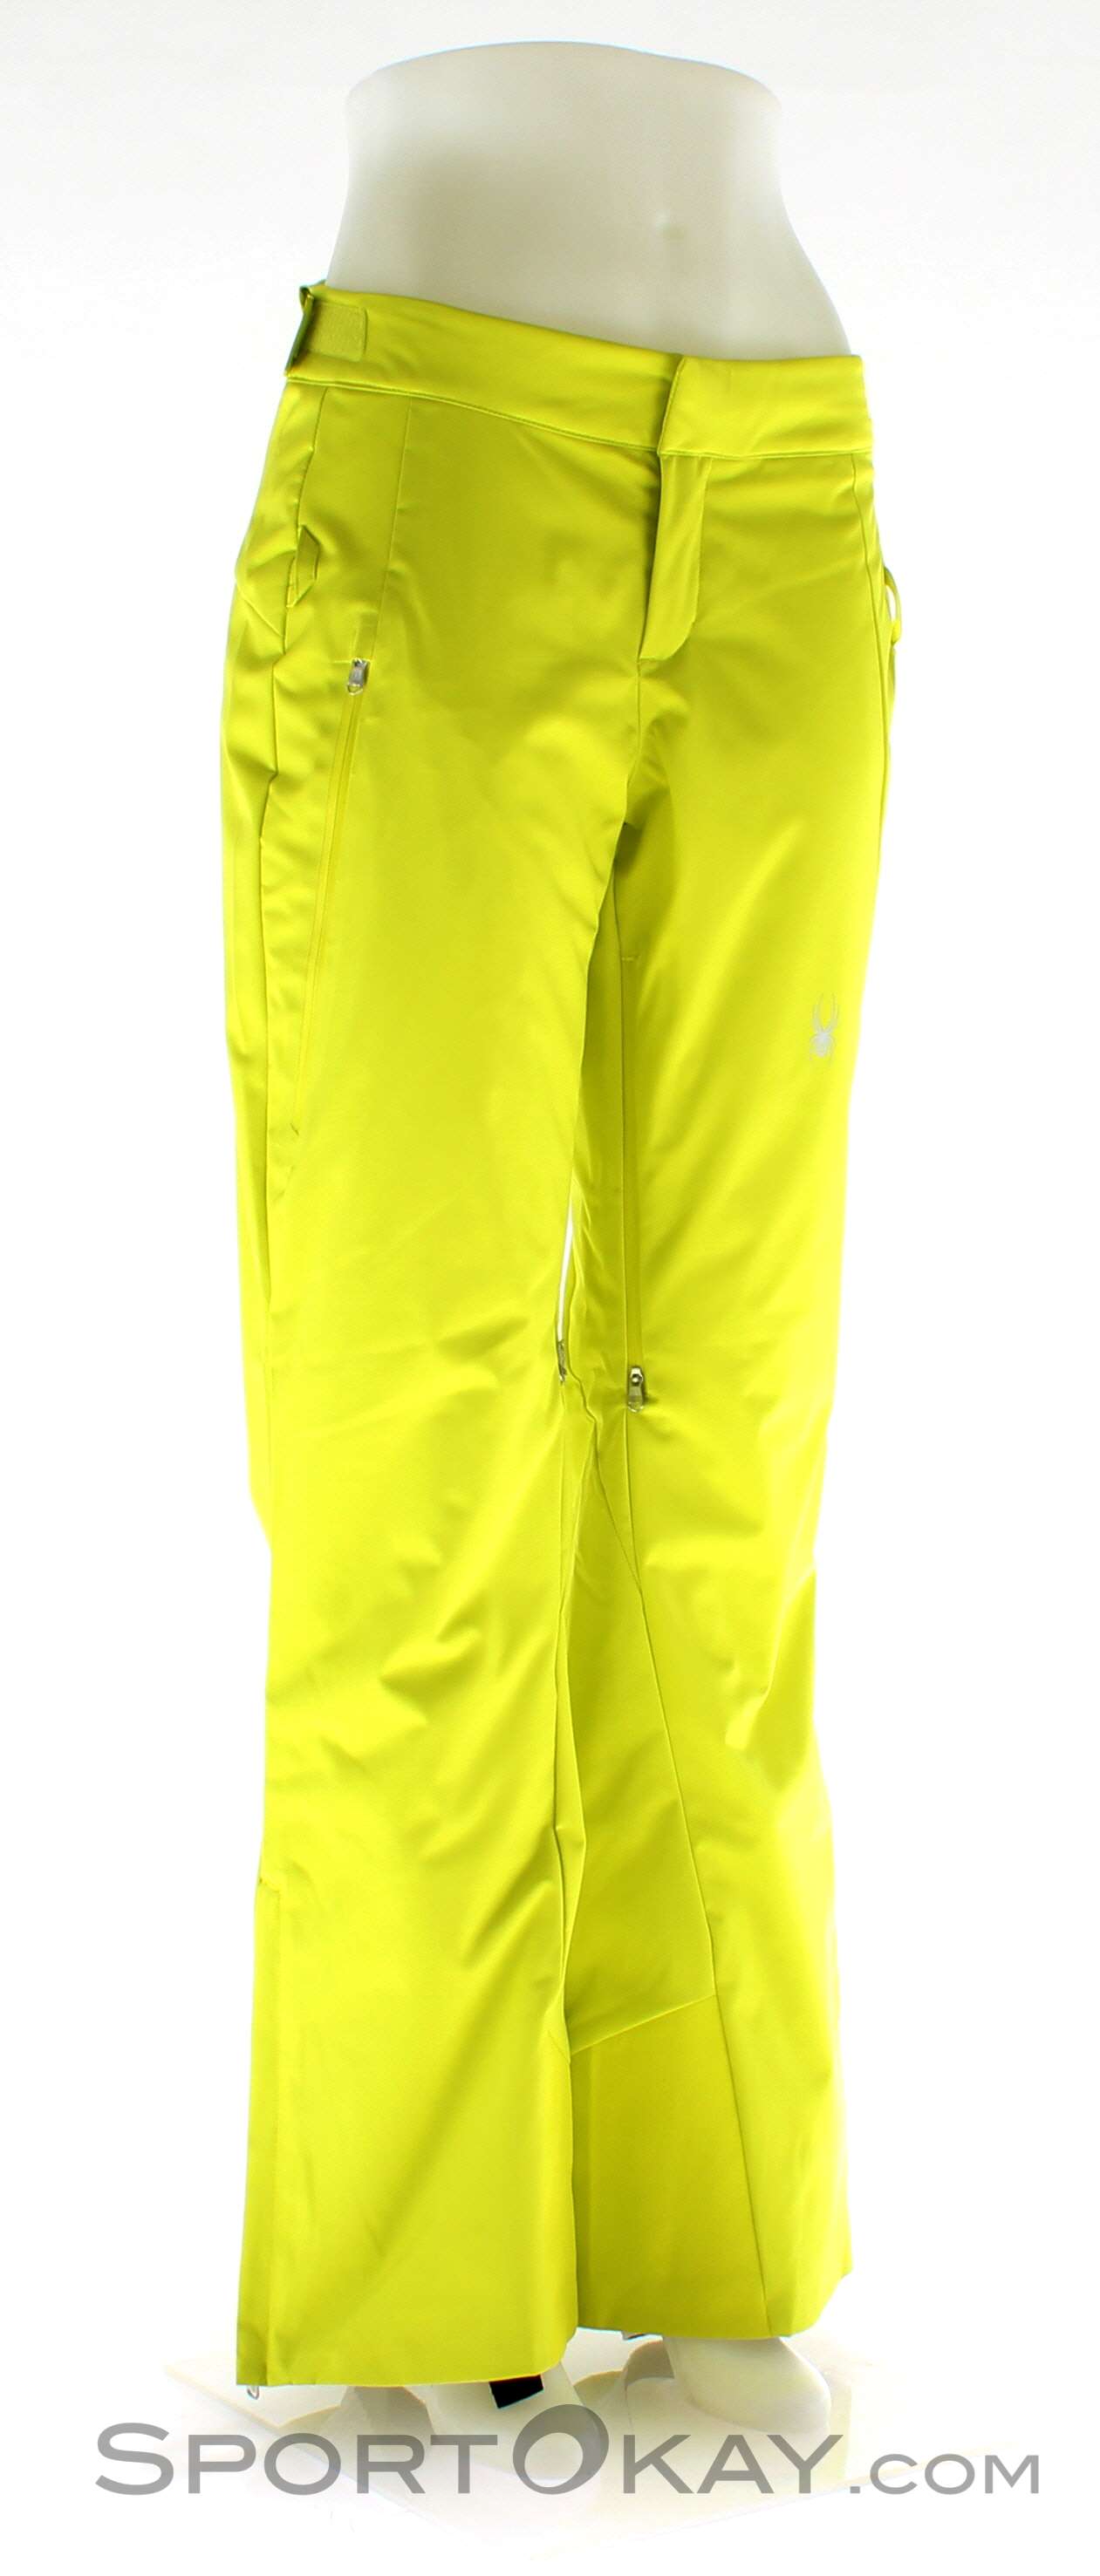 Spyder Temerity Ski Pant (Women's)